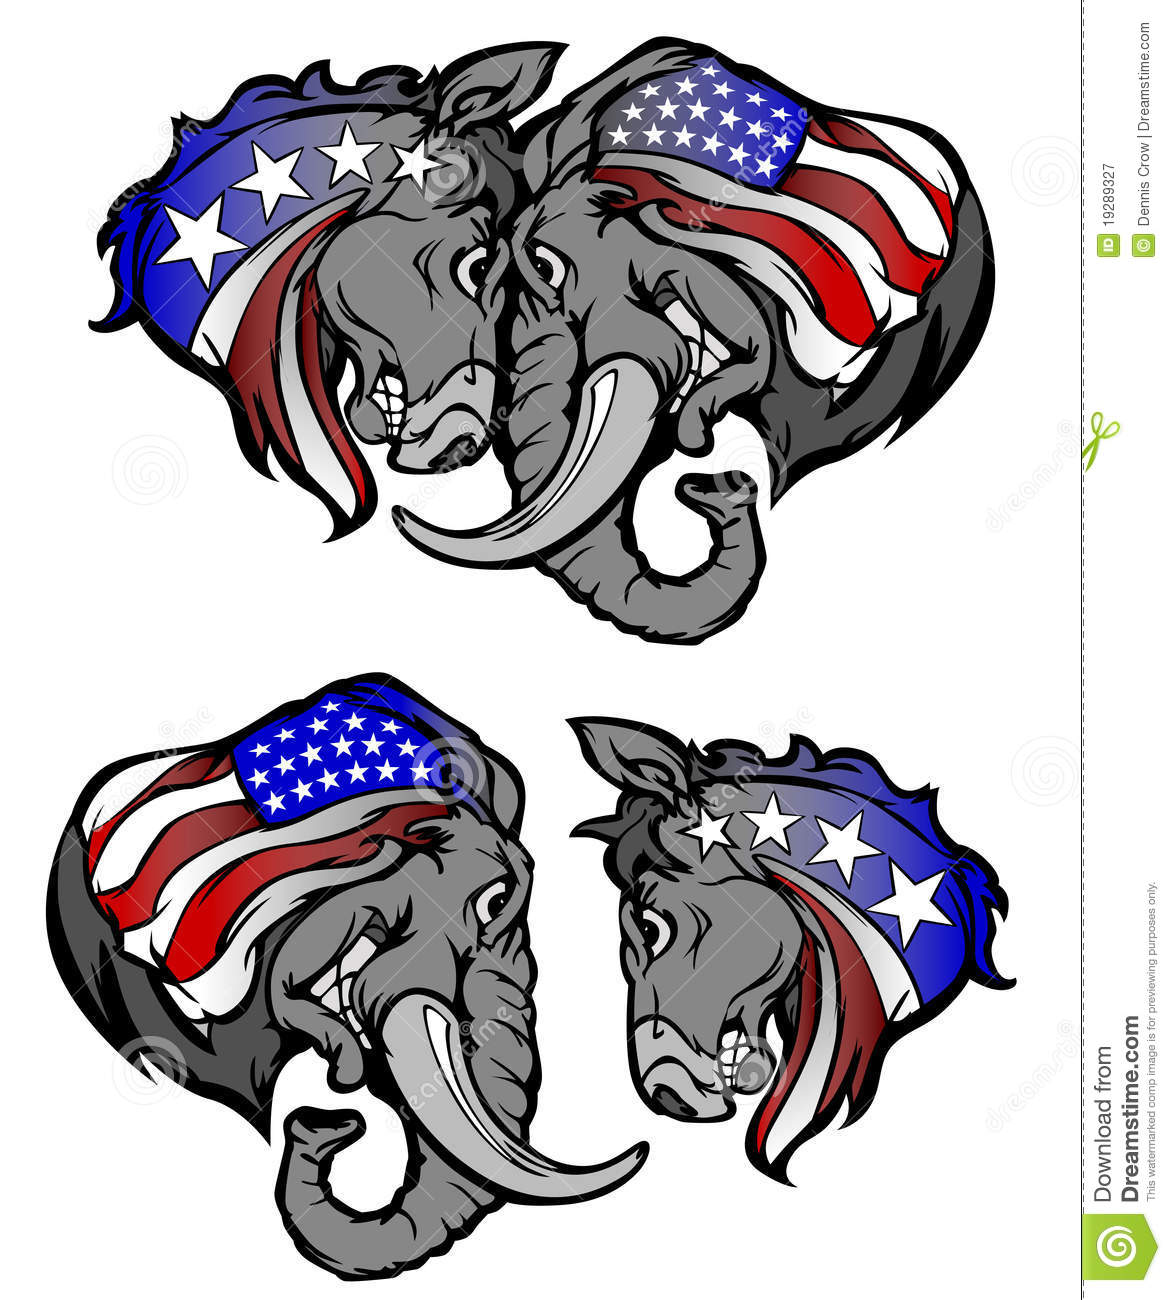 Political Elephant Republican Vs Donkey Democrat Royalty Free Stock